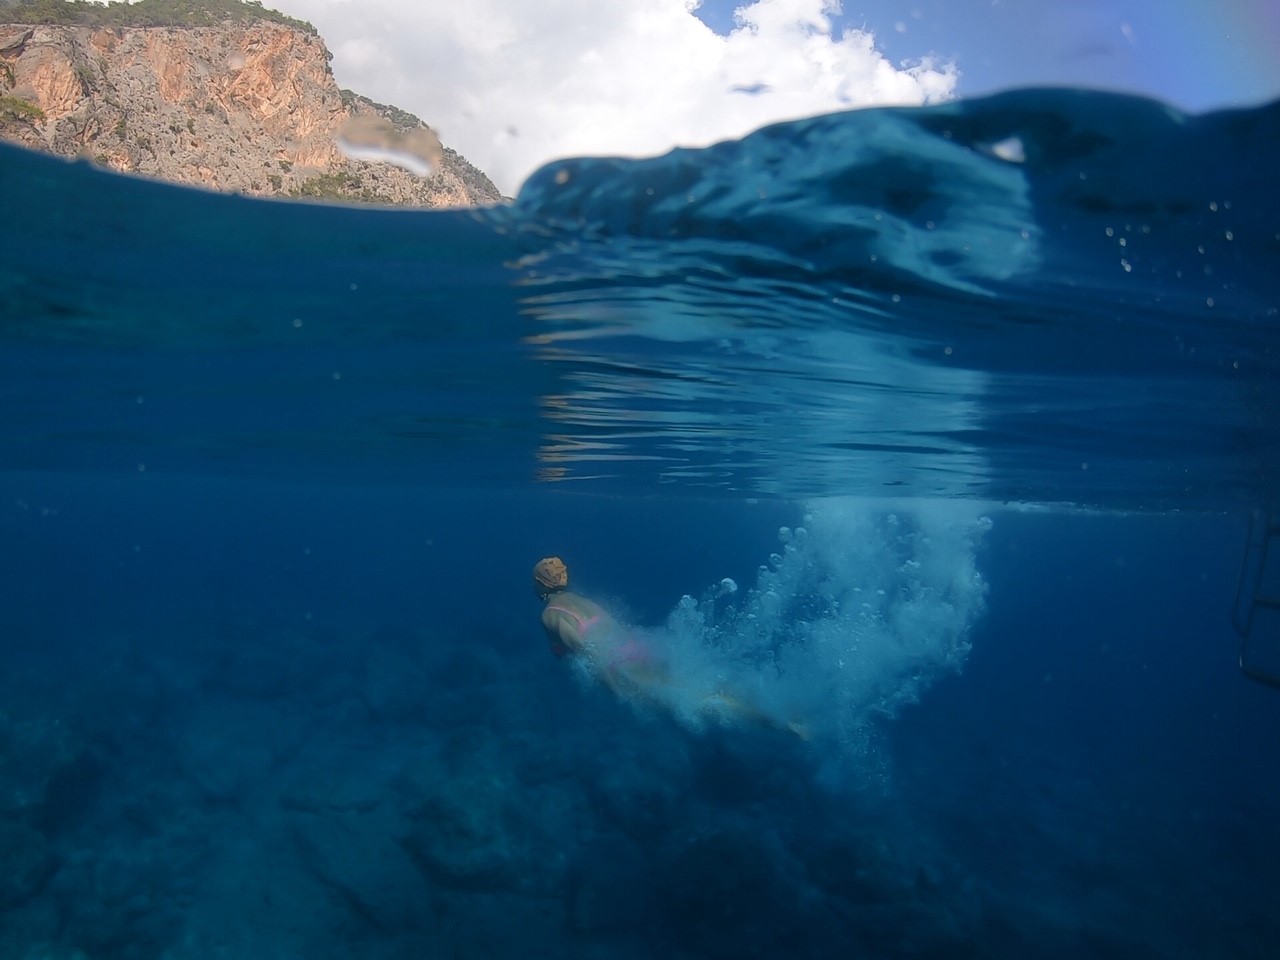 swimmer plunging underwater - Sian.jpg crete